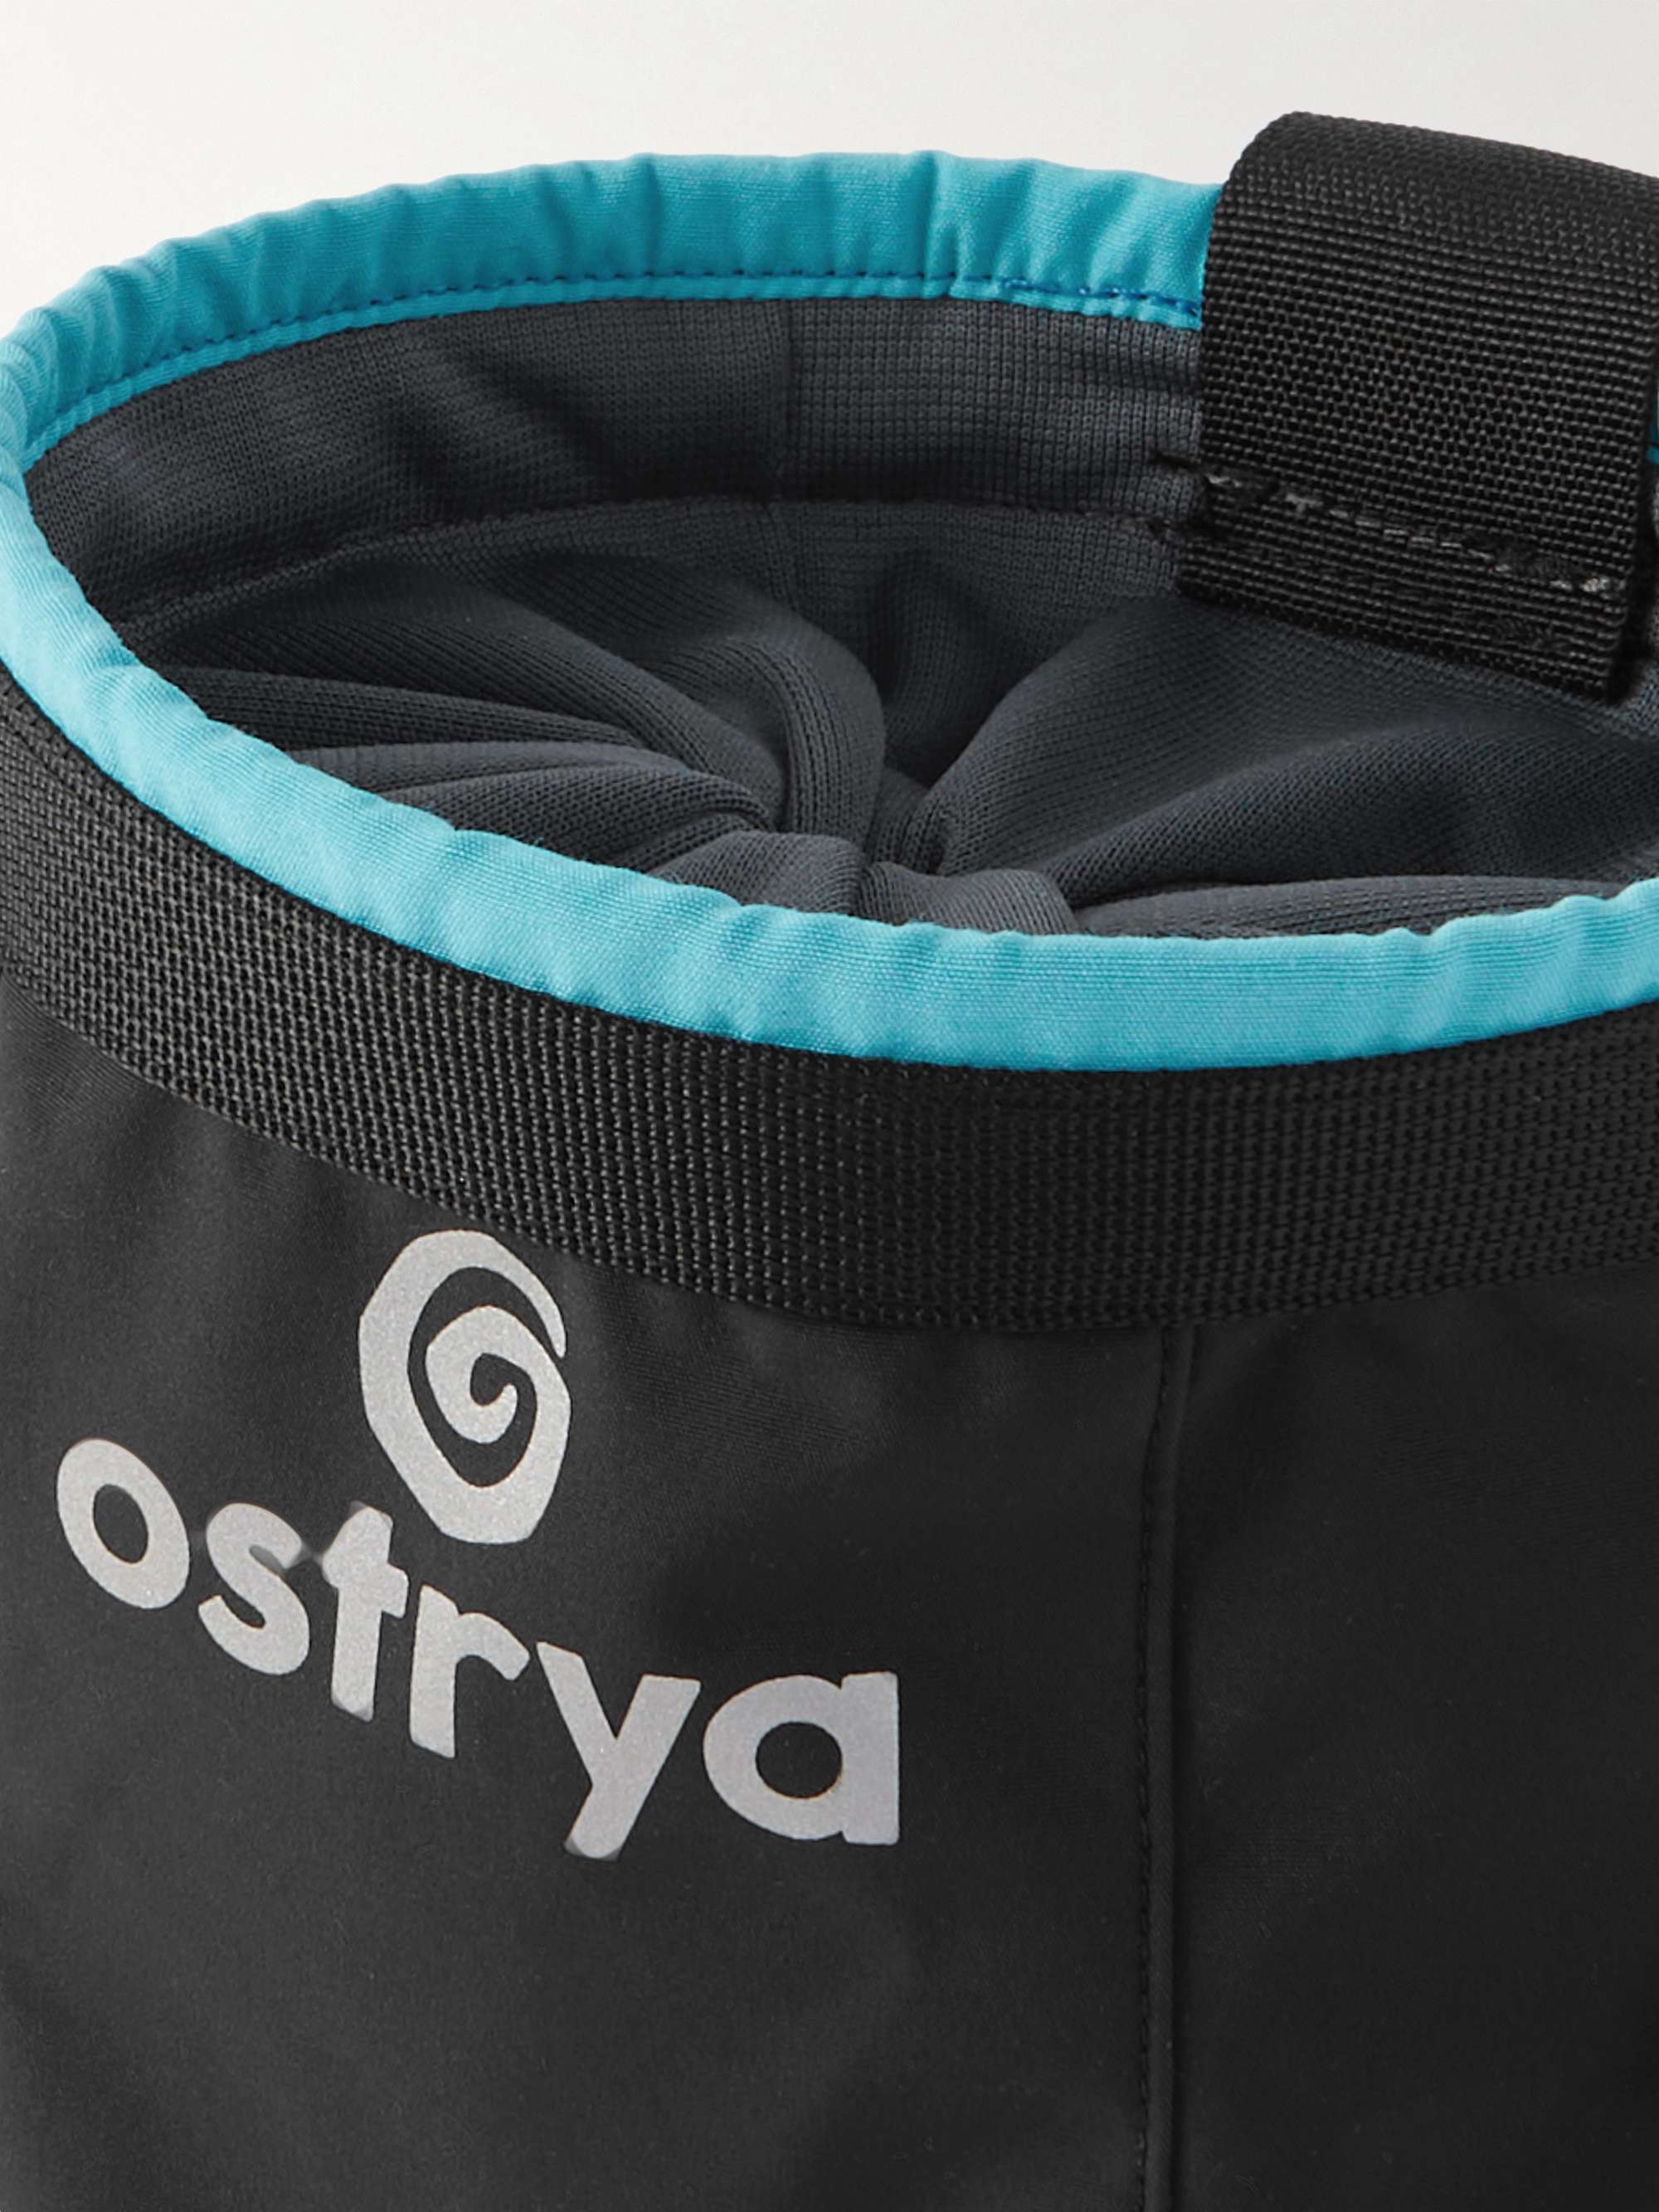 OSTRYA Traverse Logo-Print Shell Chalk Bag